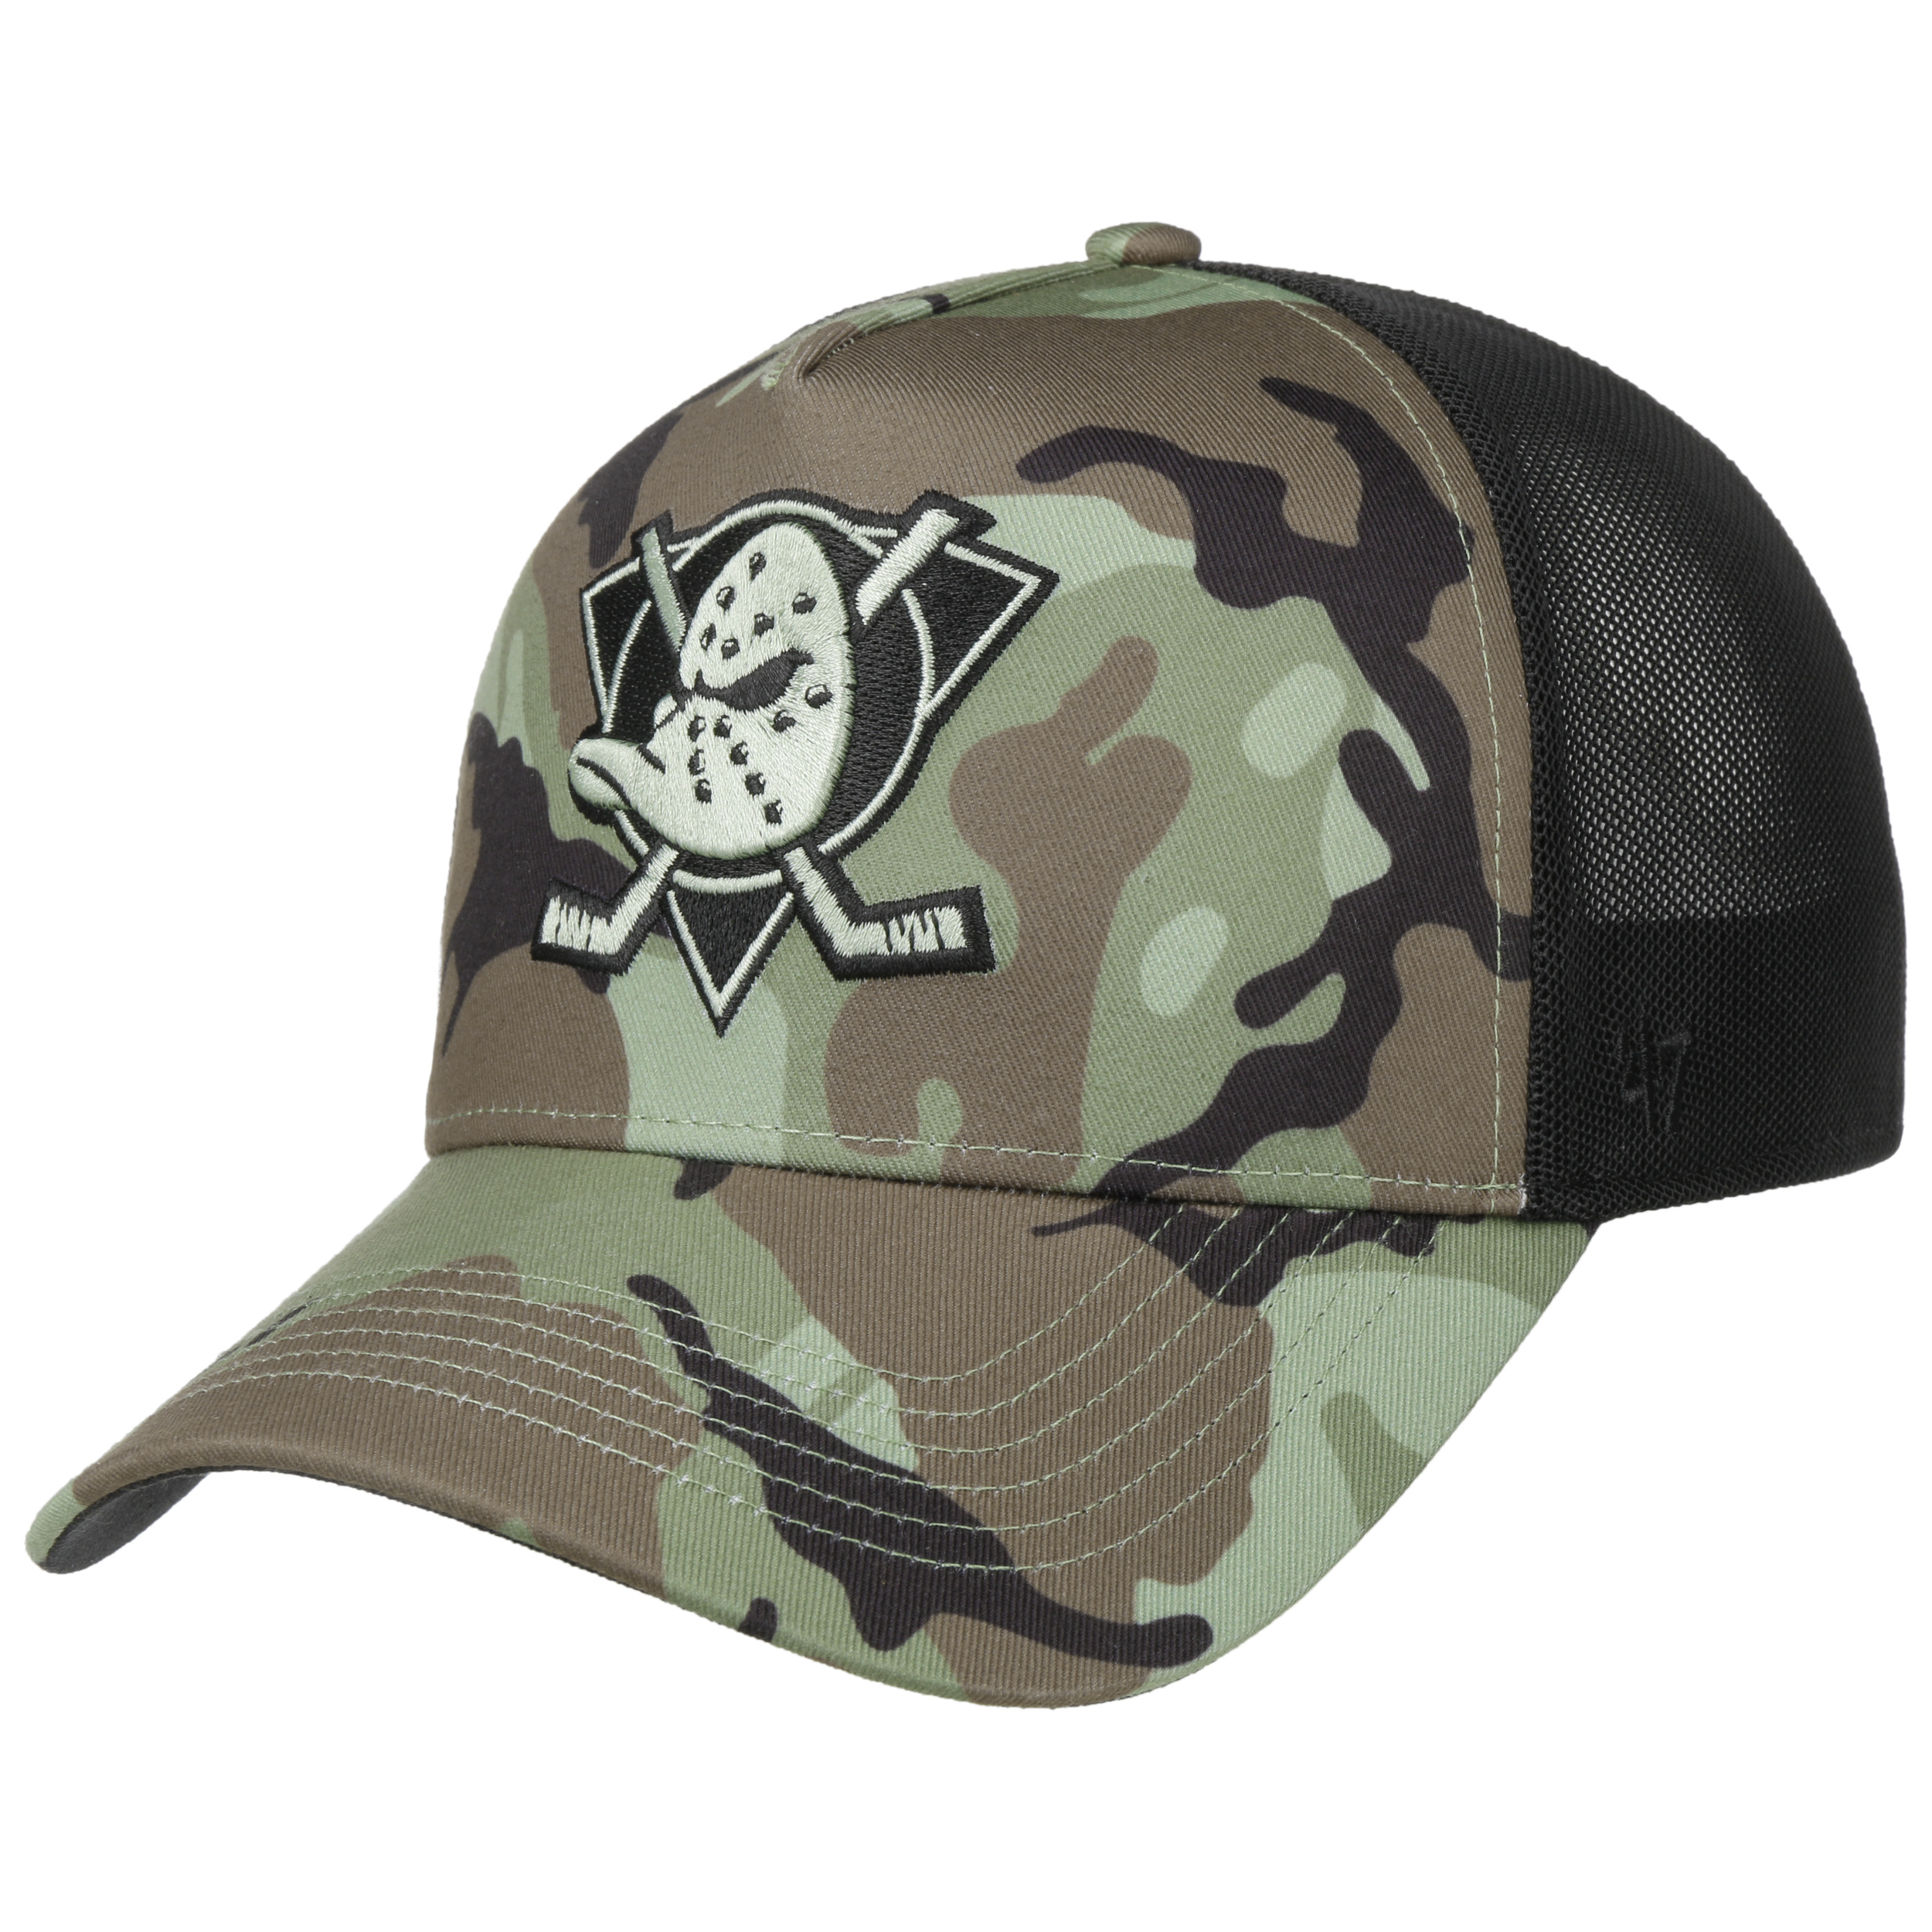 https://img.hatshopping.com/NHL-Anaheim-Ducks-Mesh-Cap-by-47-Brand-camouflage.63059_rf61.jpg